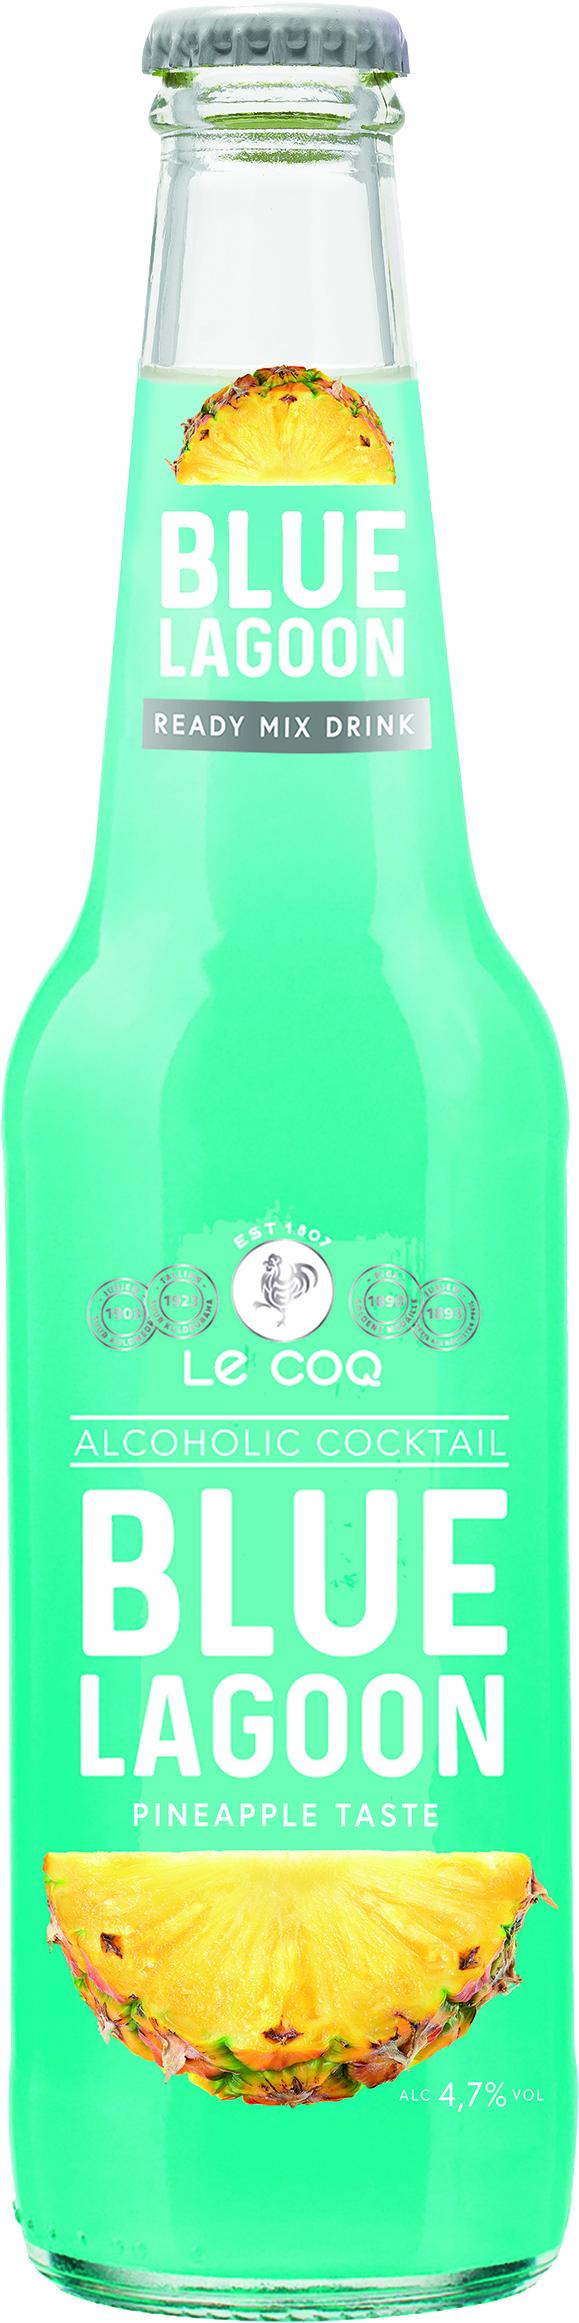 Slika za Cider-koktel LE Coq Blue lagoon  0,33l